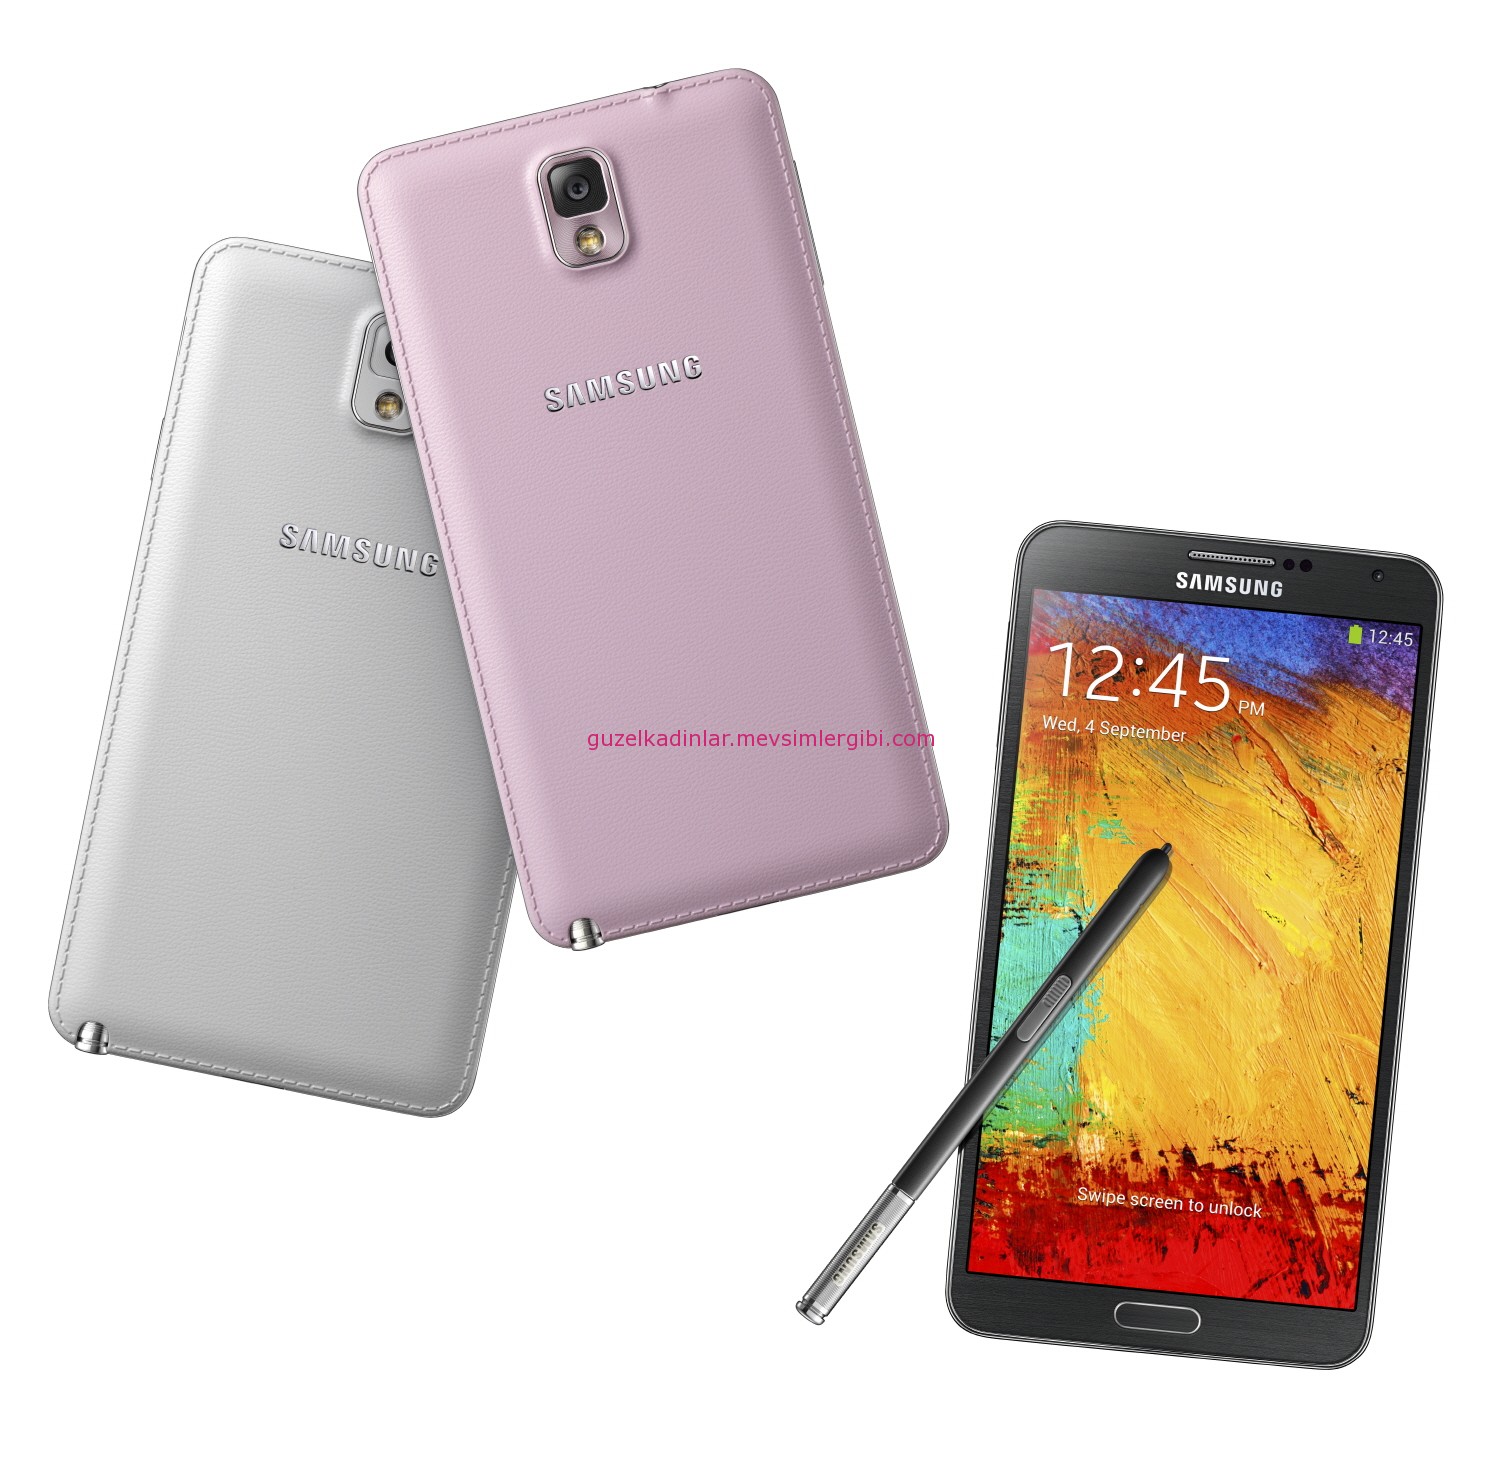 Samsung GALAXY Note 3 pembe cep telefonu